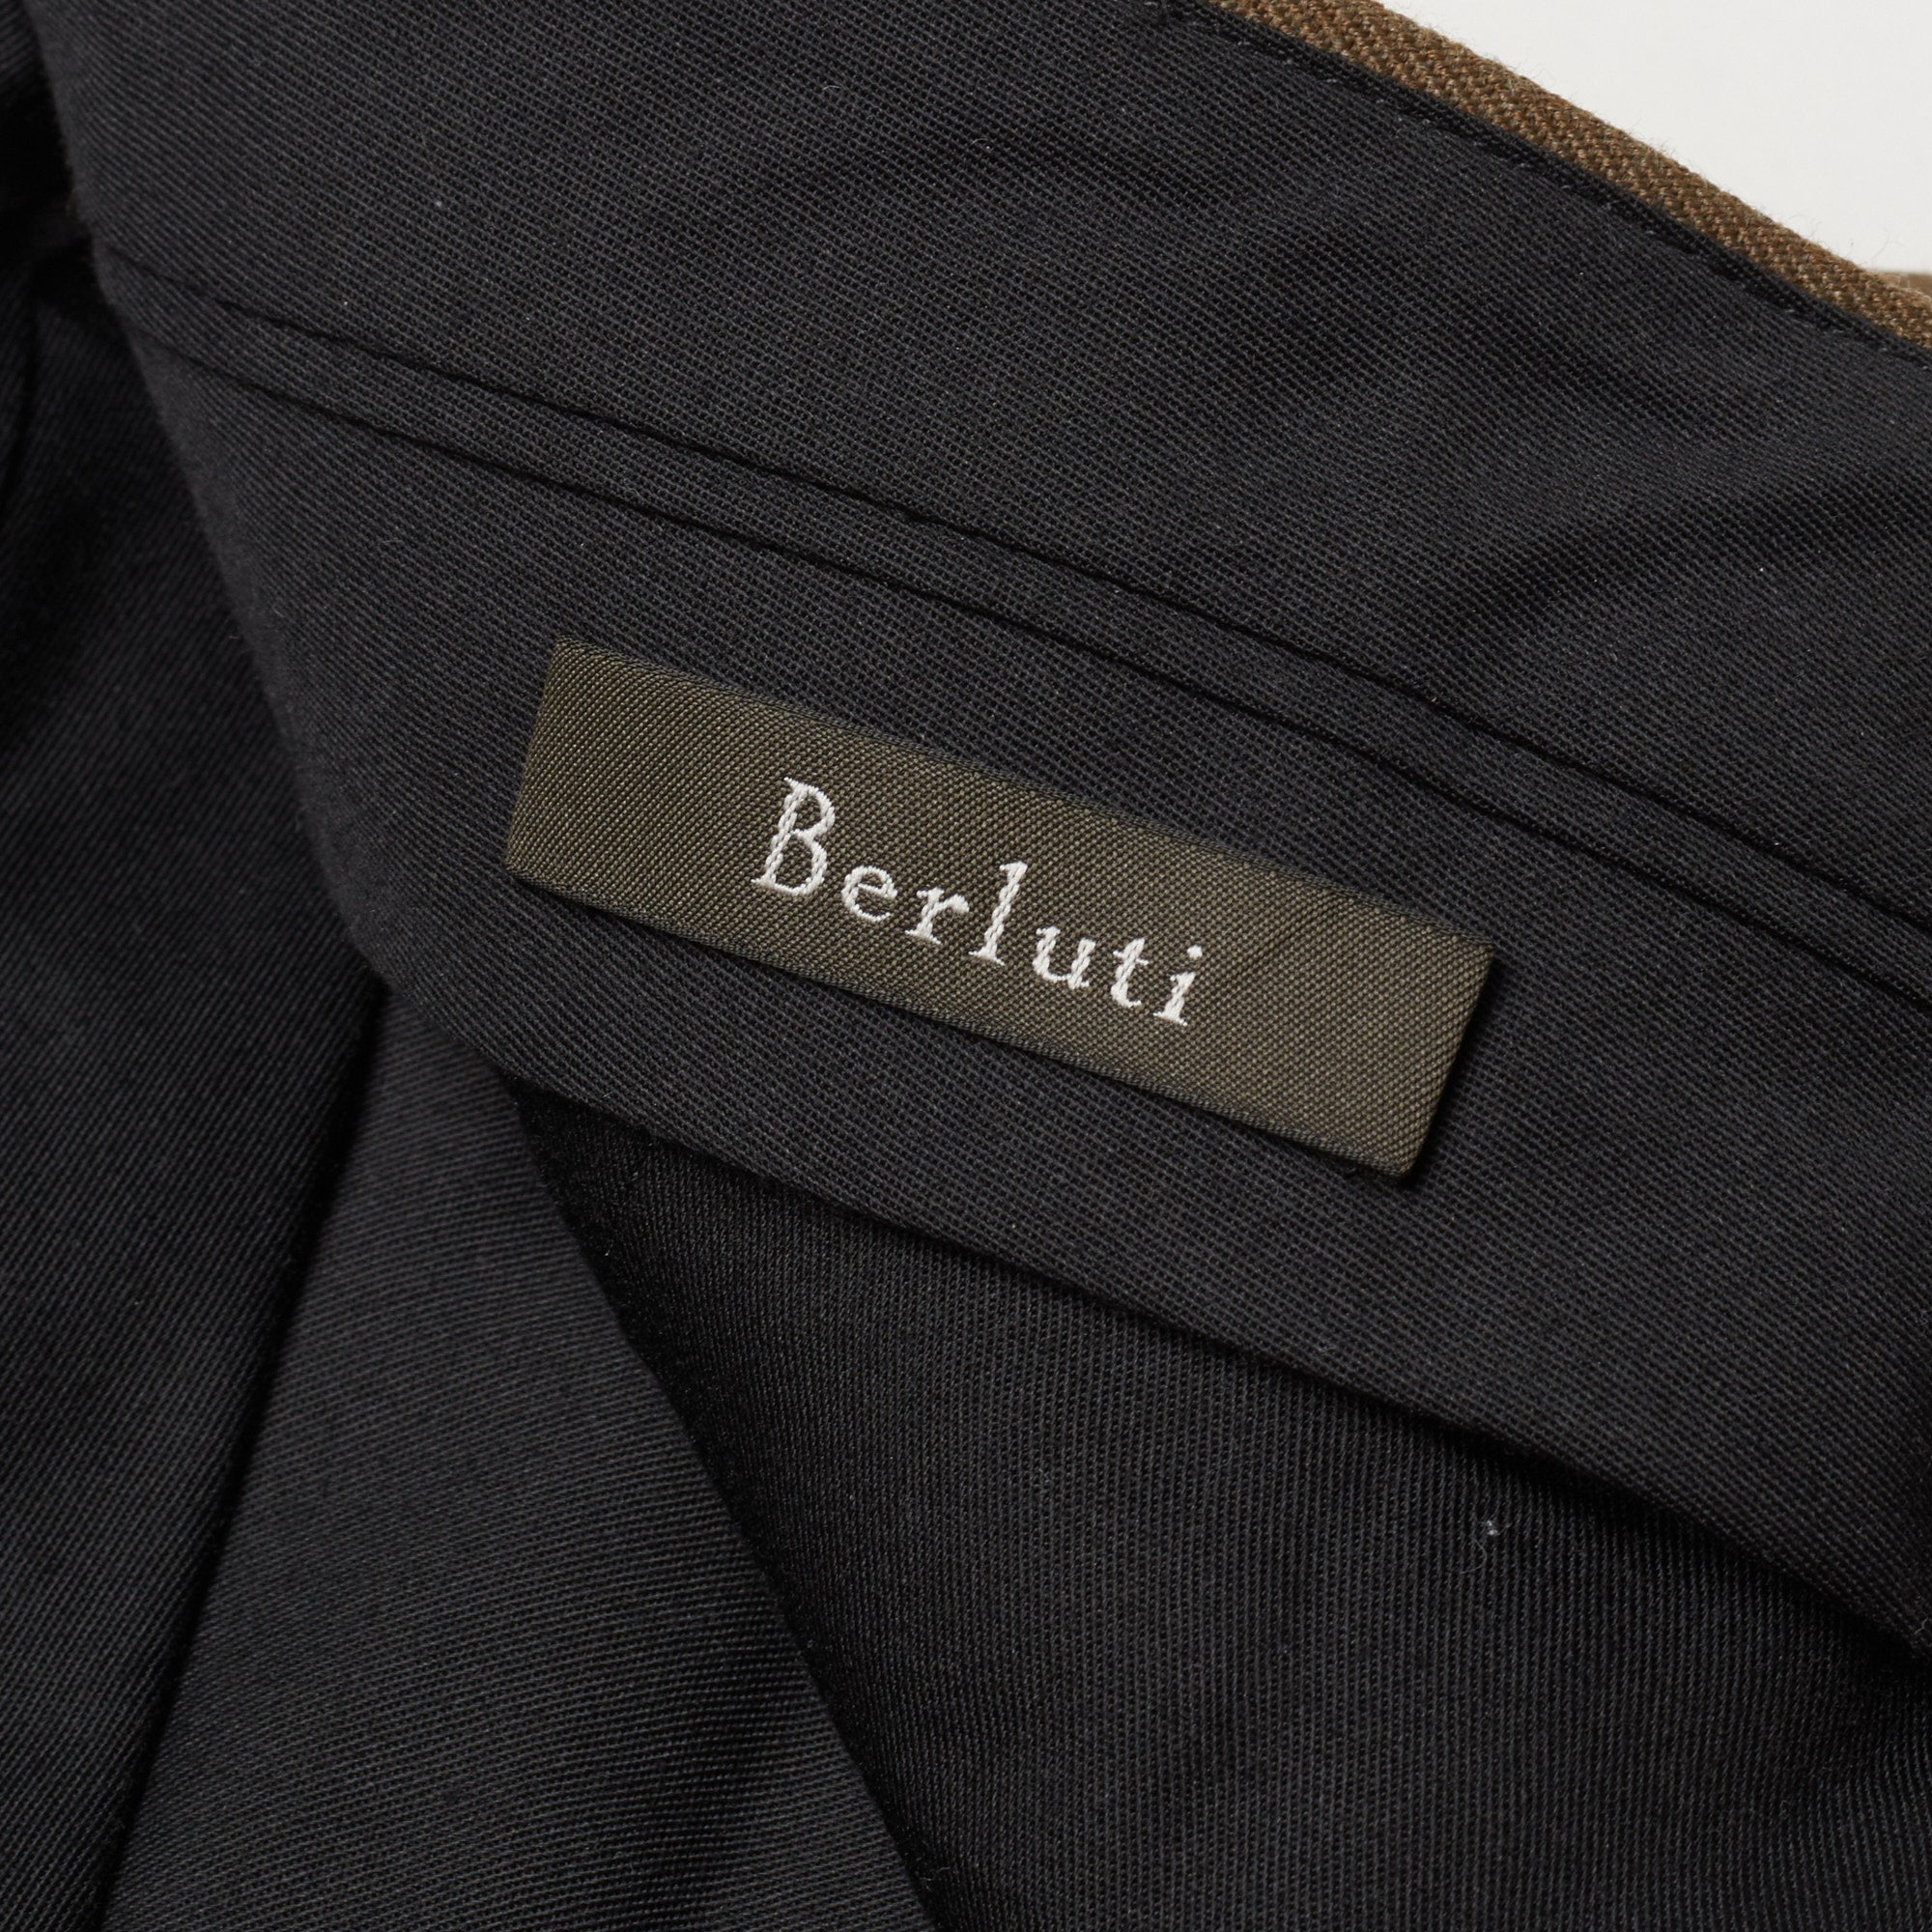 BERLUTI Paris Brown Twill Virgin Wool Blend Slim Fit Chino Pants EU 50 NEW US 34